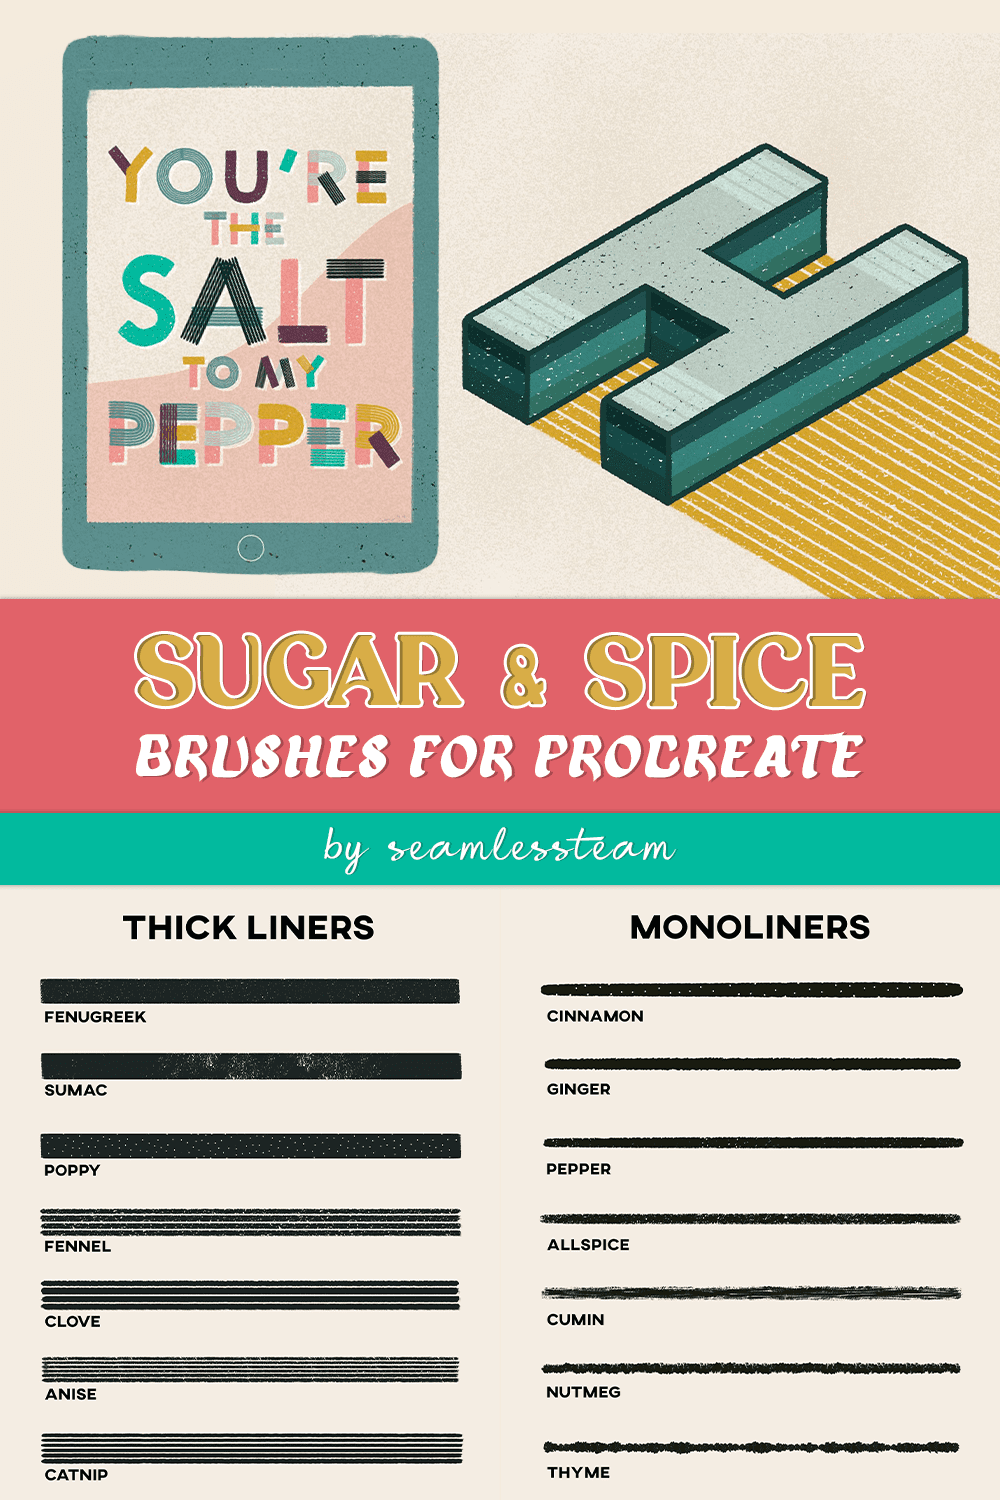 Sugar & Spice Brushes For Procreate - Pinterest.